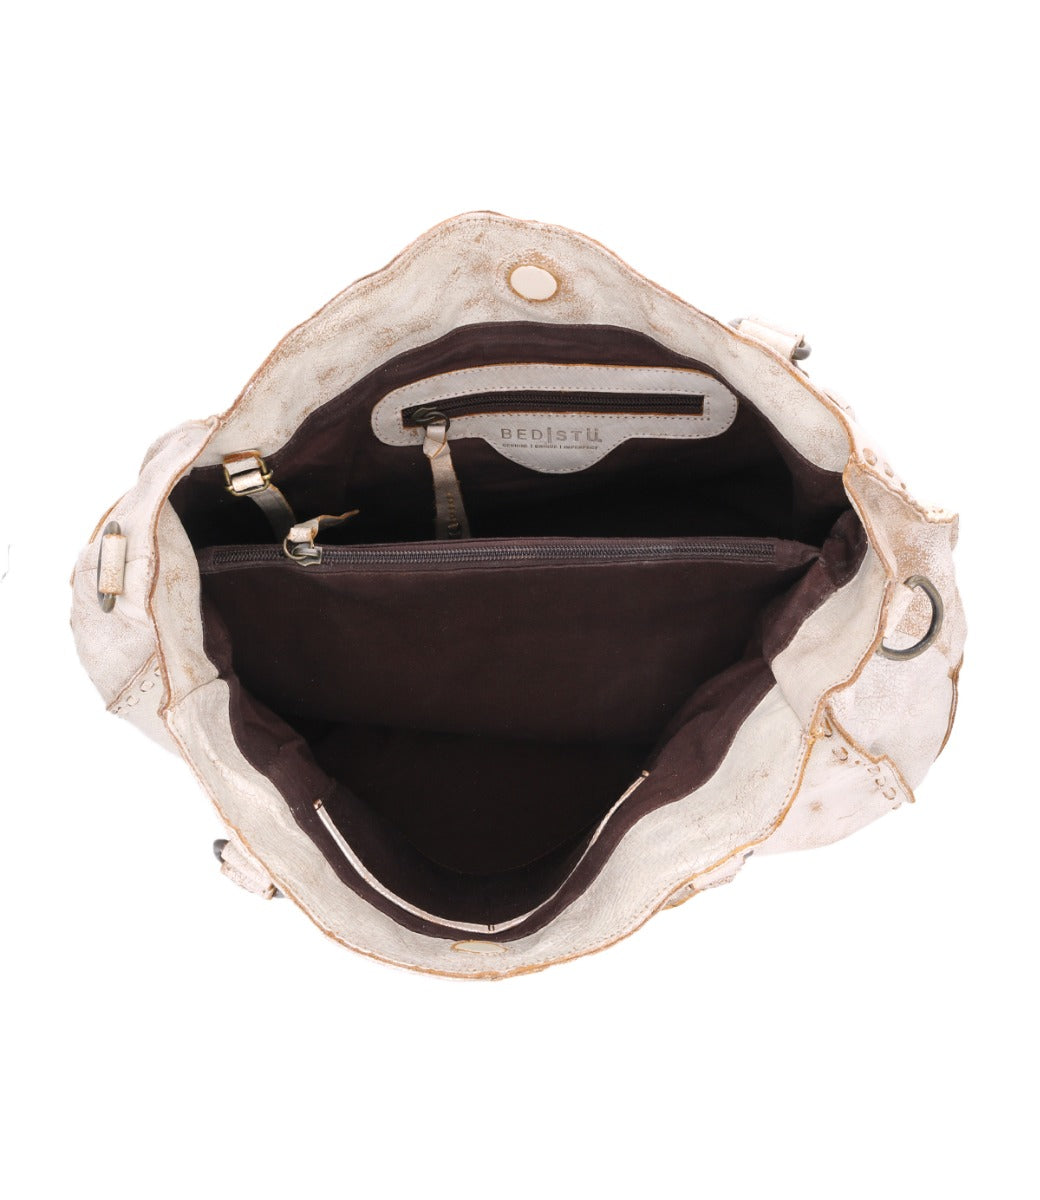 The inside of a white Bed Stu Rockaway handbag with a gold zipper.